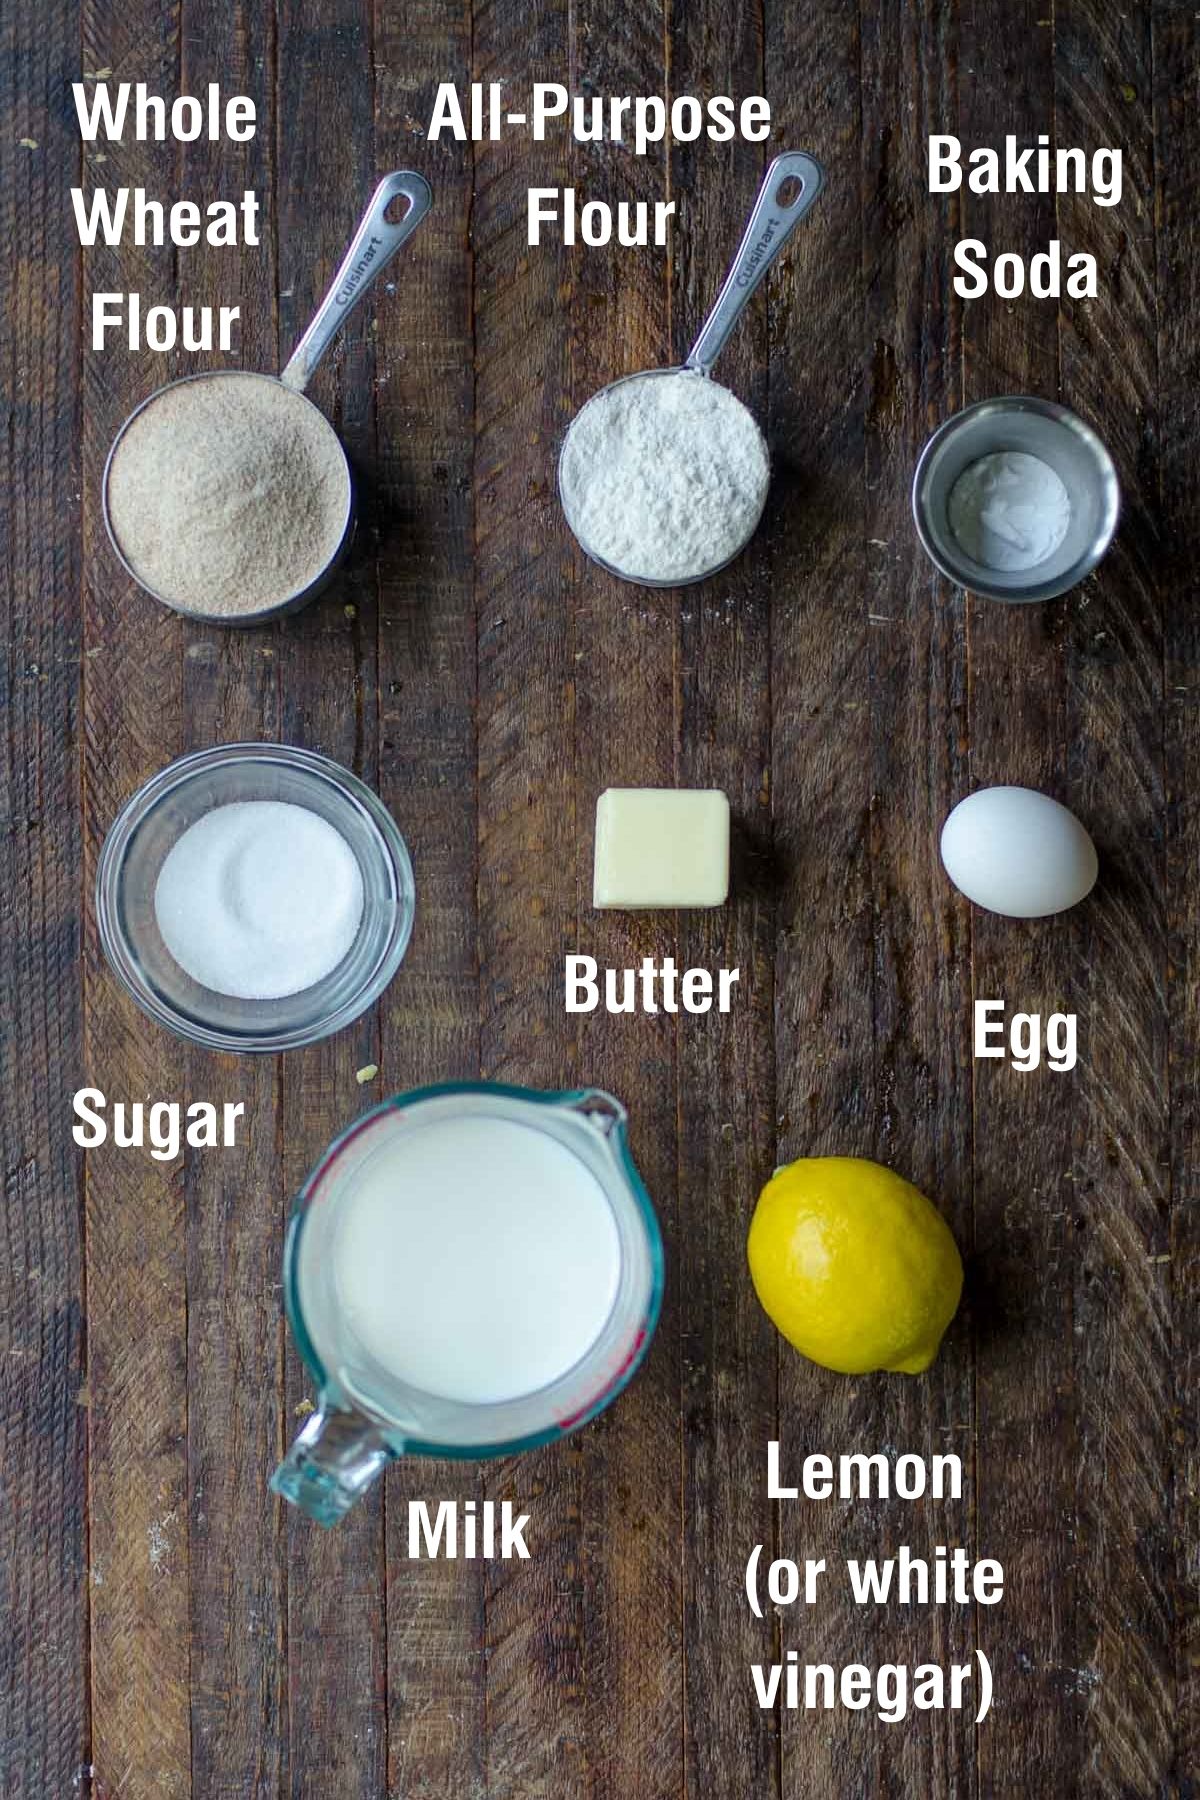 Ingredients for making soda bread.